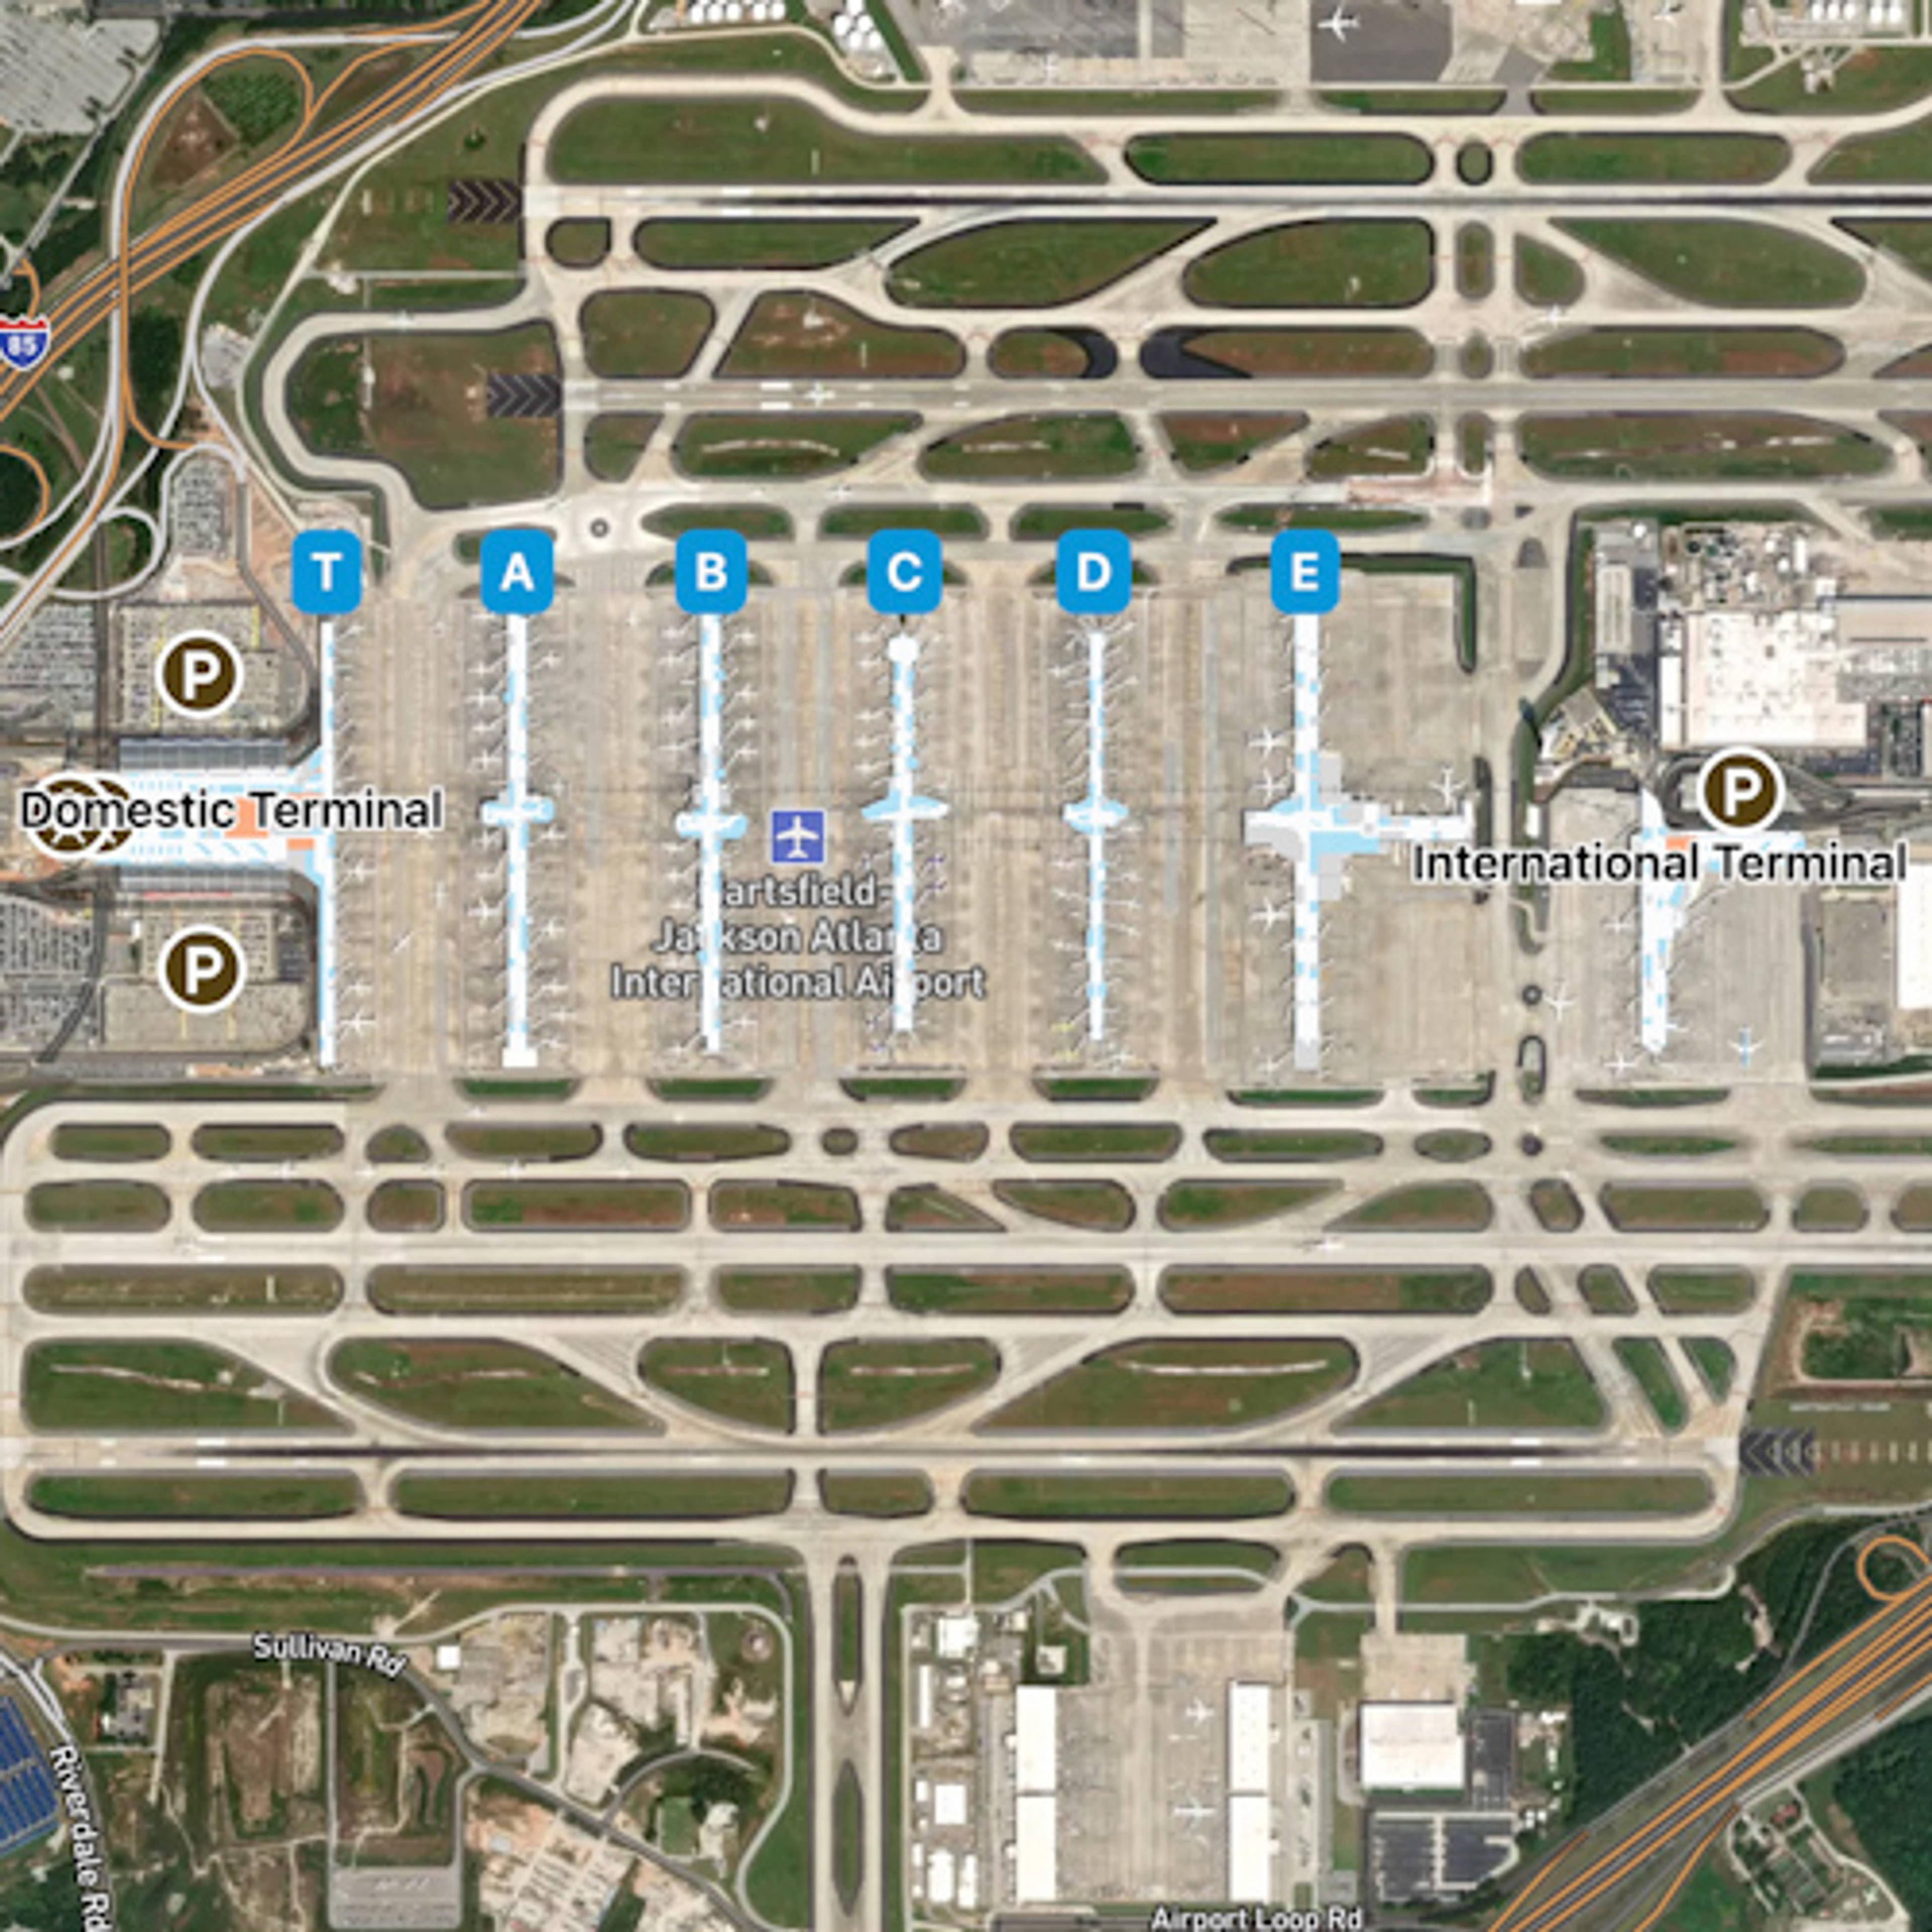 Hartsfield Jackson Atlanta Airport ATL Terminal Overview Map